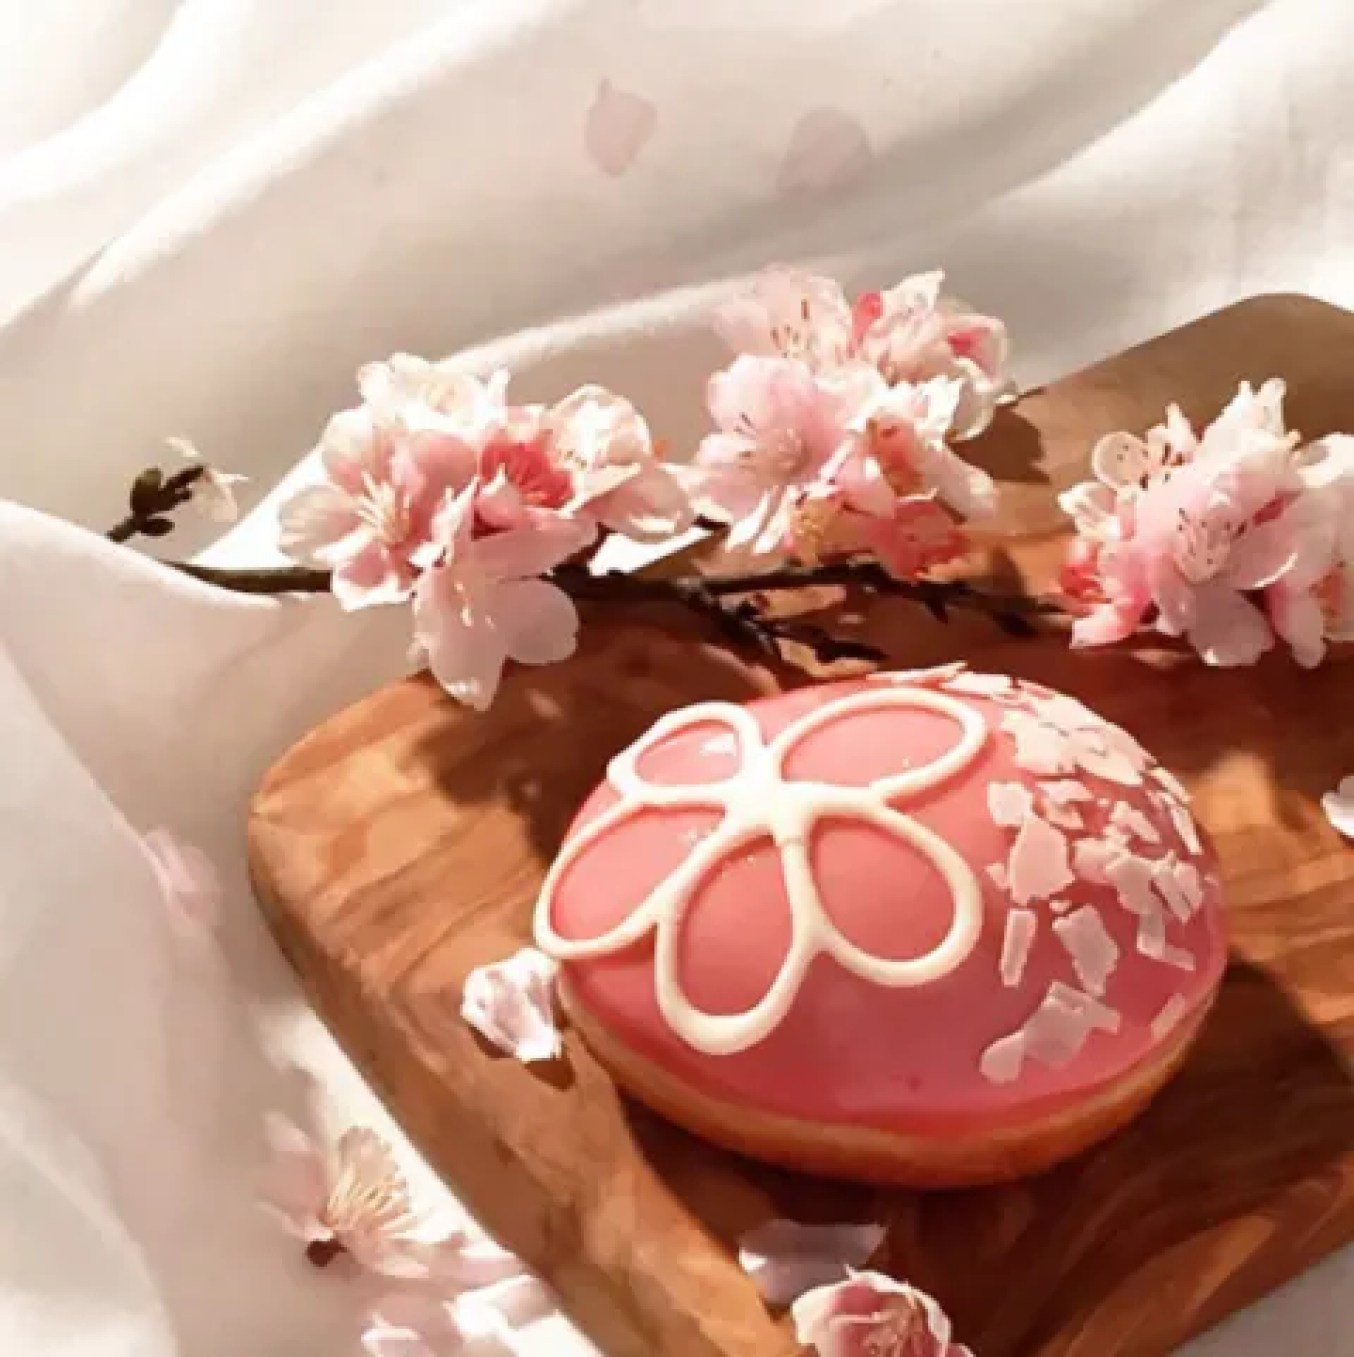 Sakura (Cherry Blossom)